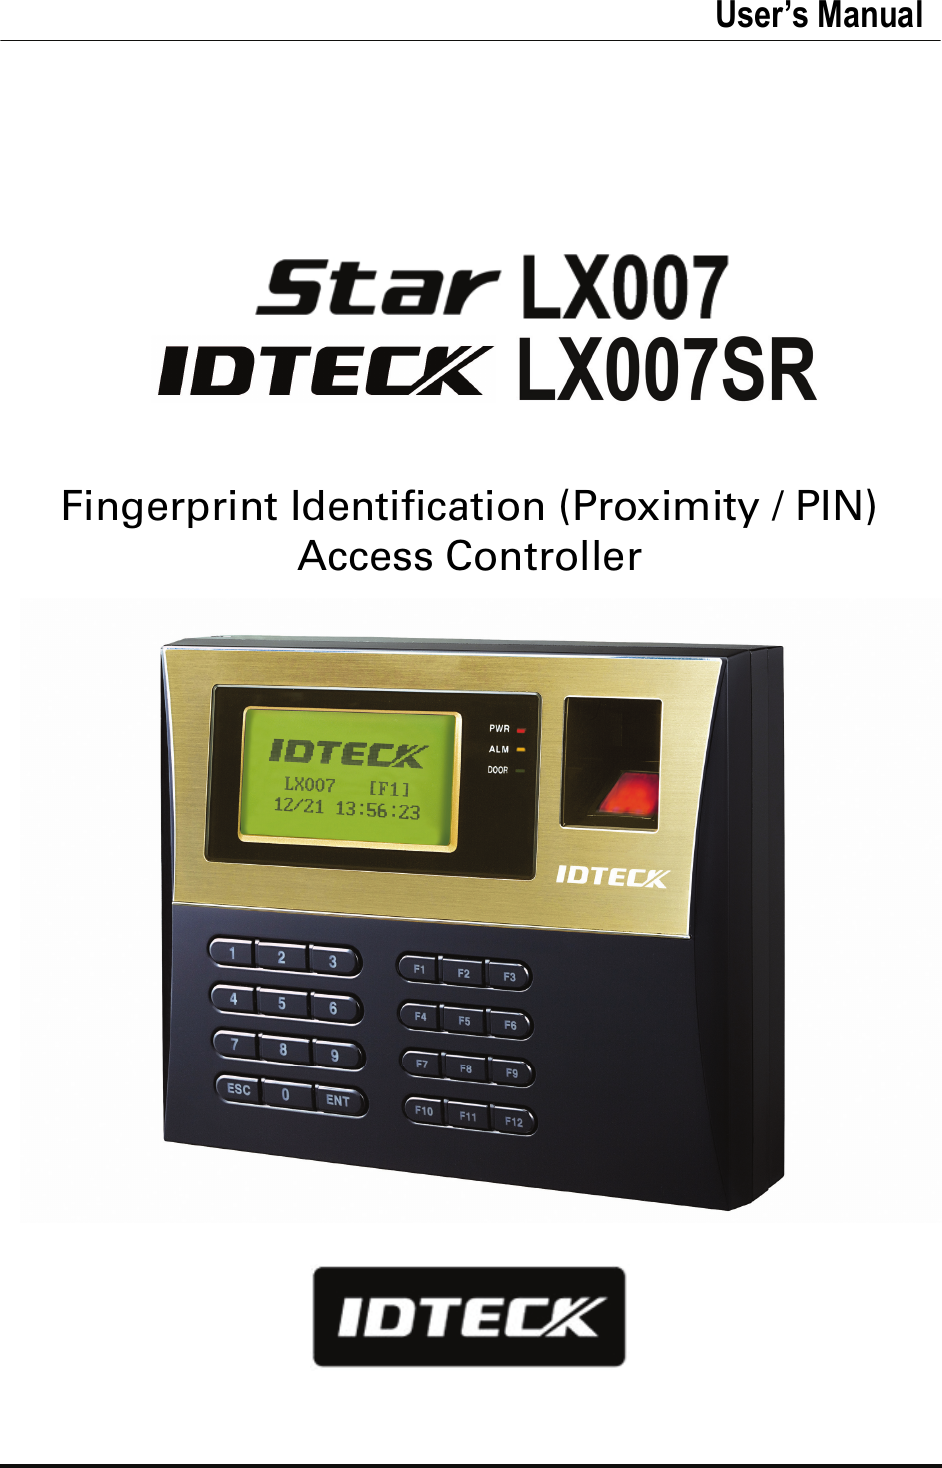      User’s Manual          Fingerprint Identification (Proximity / PIN) Access Controller                  